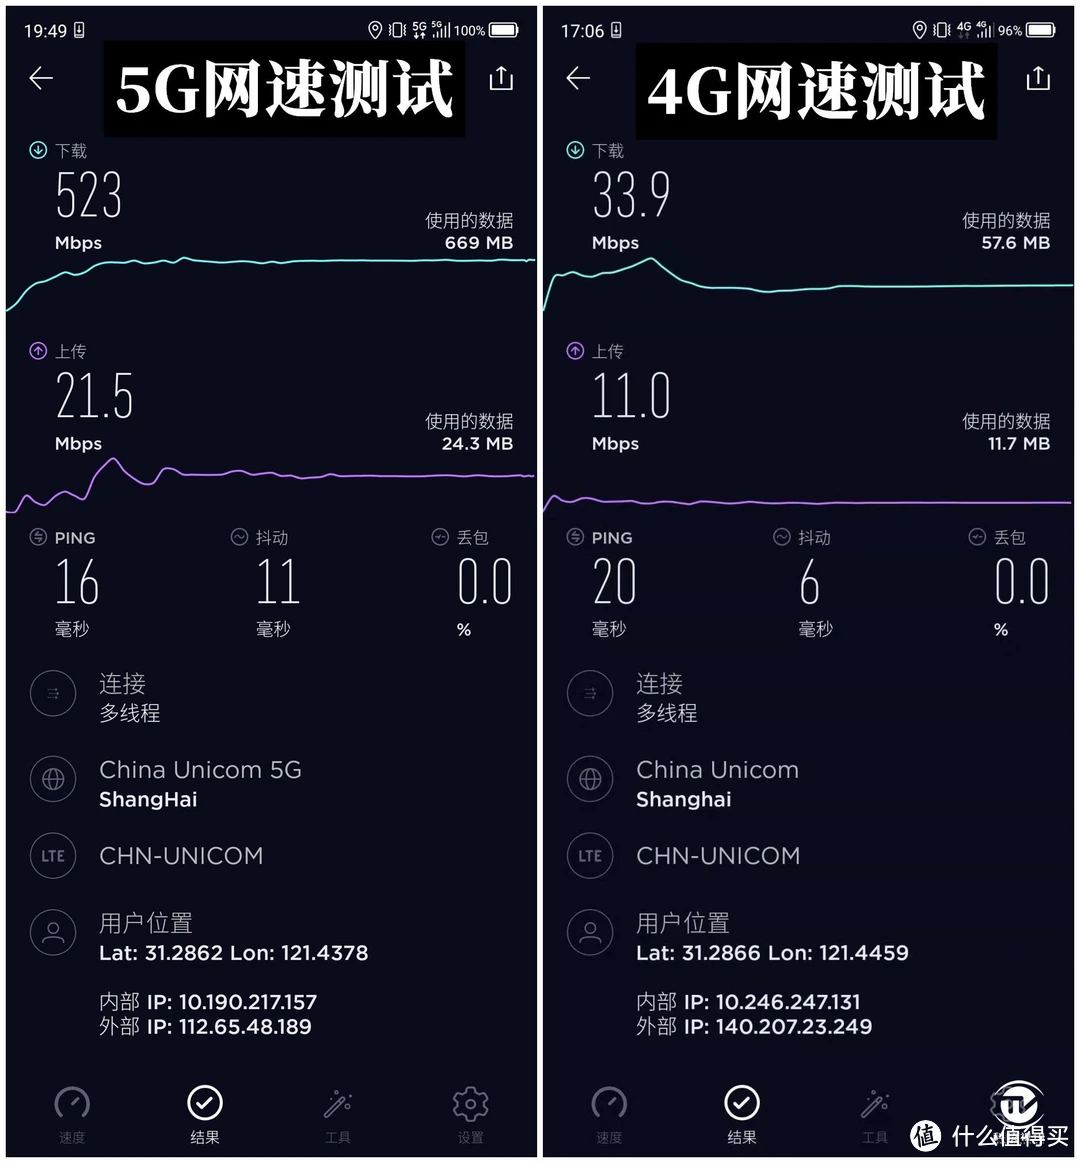 4G 手机和 5G 手机哪个更省电？看完这篇文章你就知道了  第1张